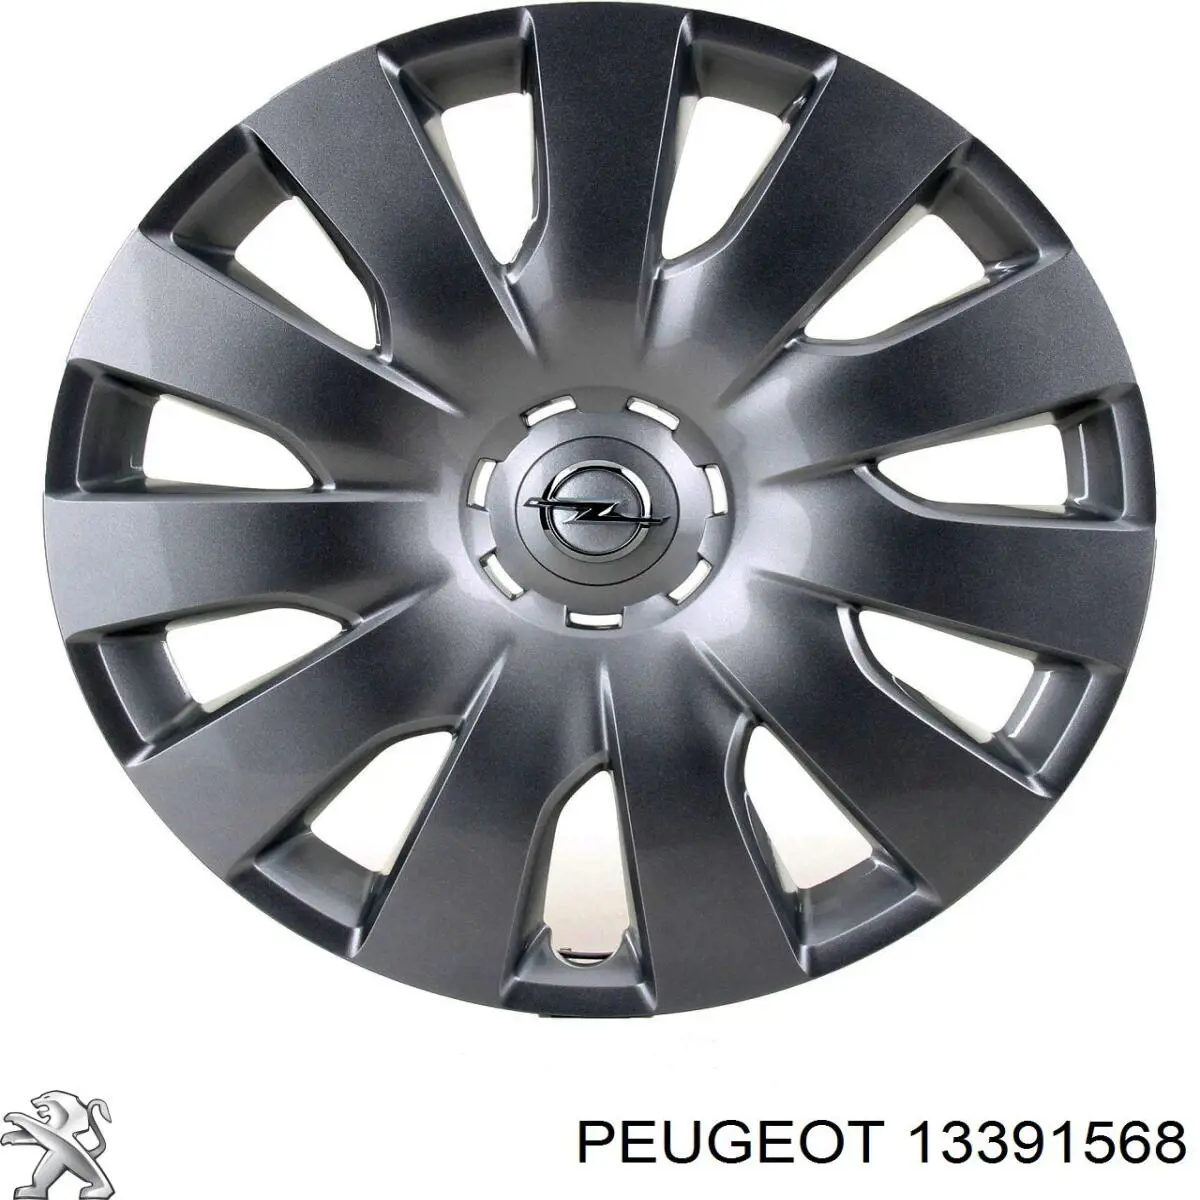 Tapacubo rueda 13391568 Peugeot/Citroen